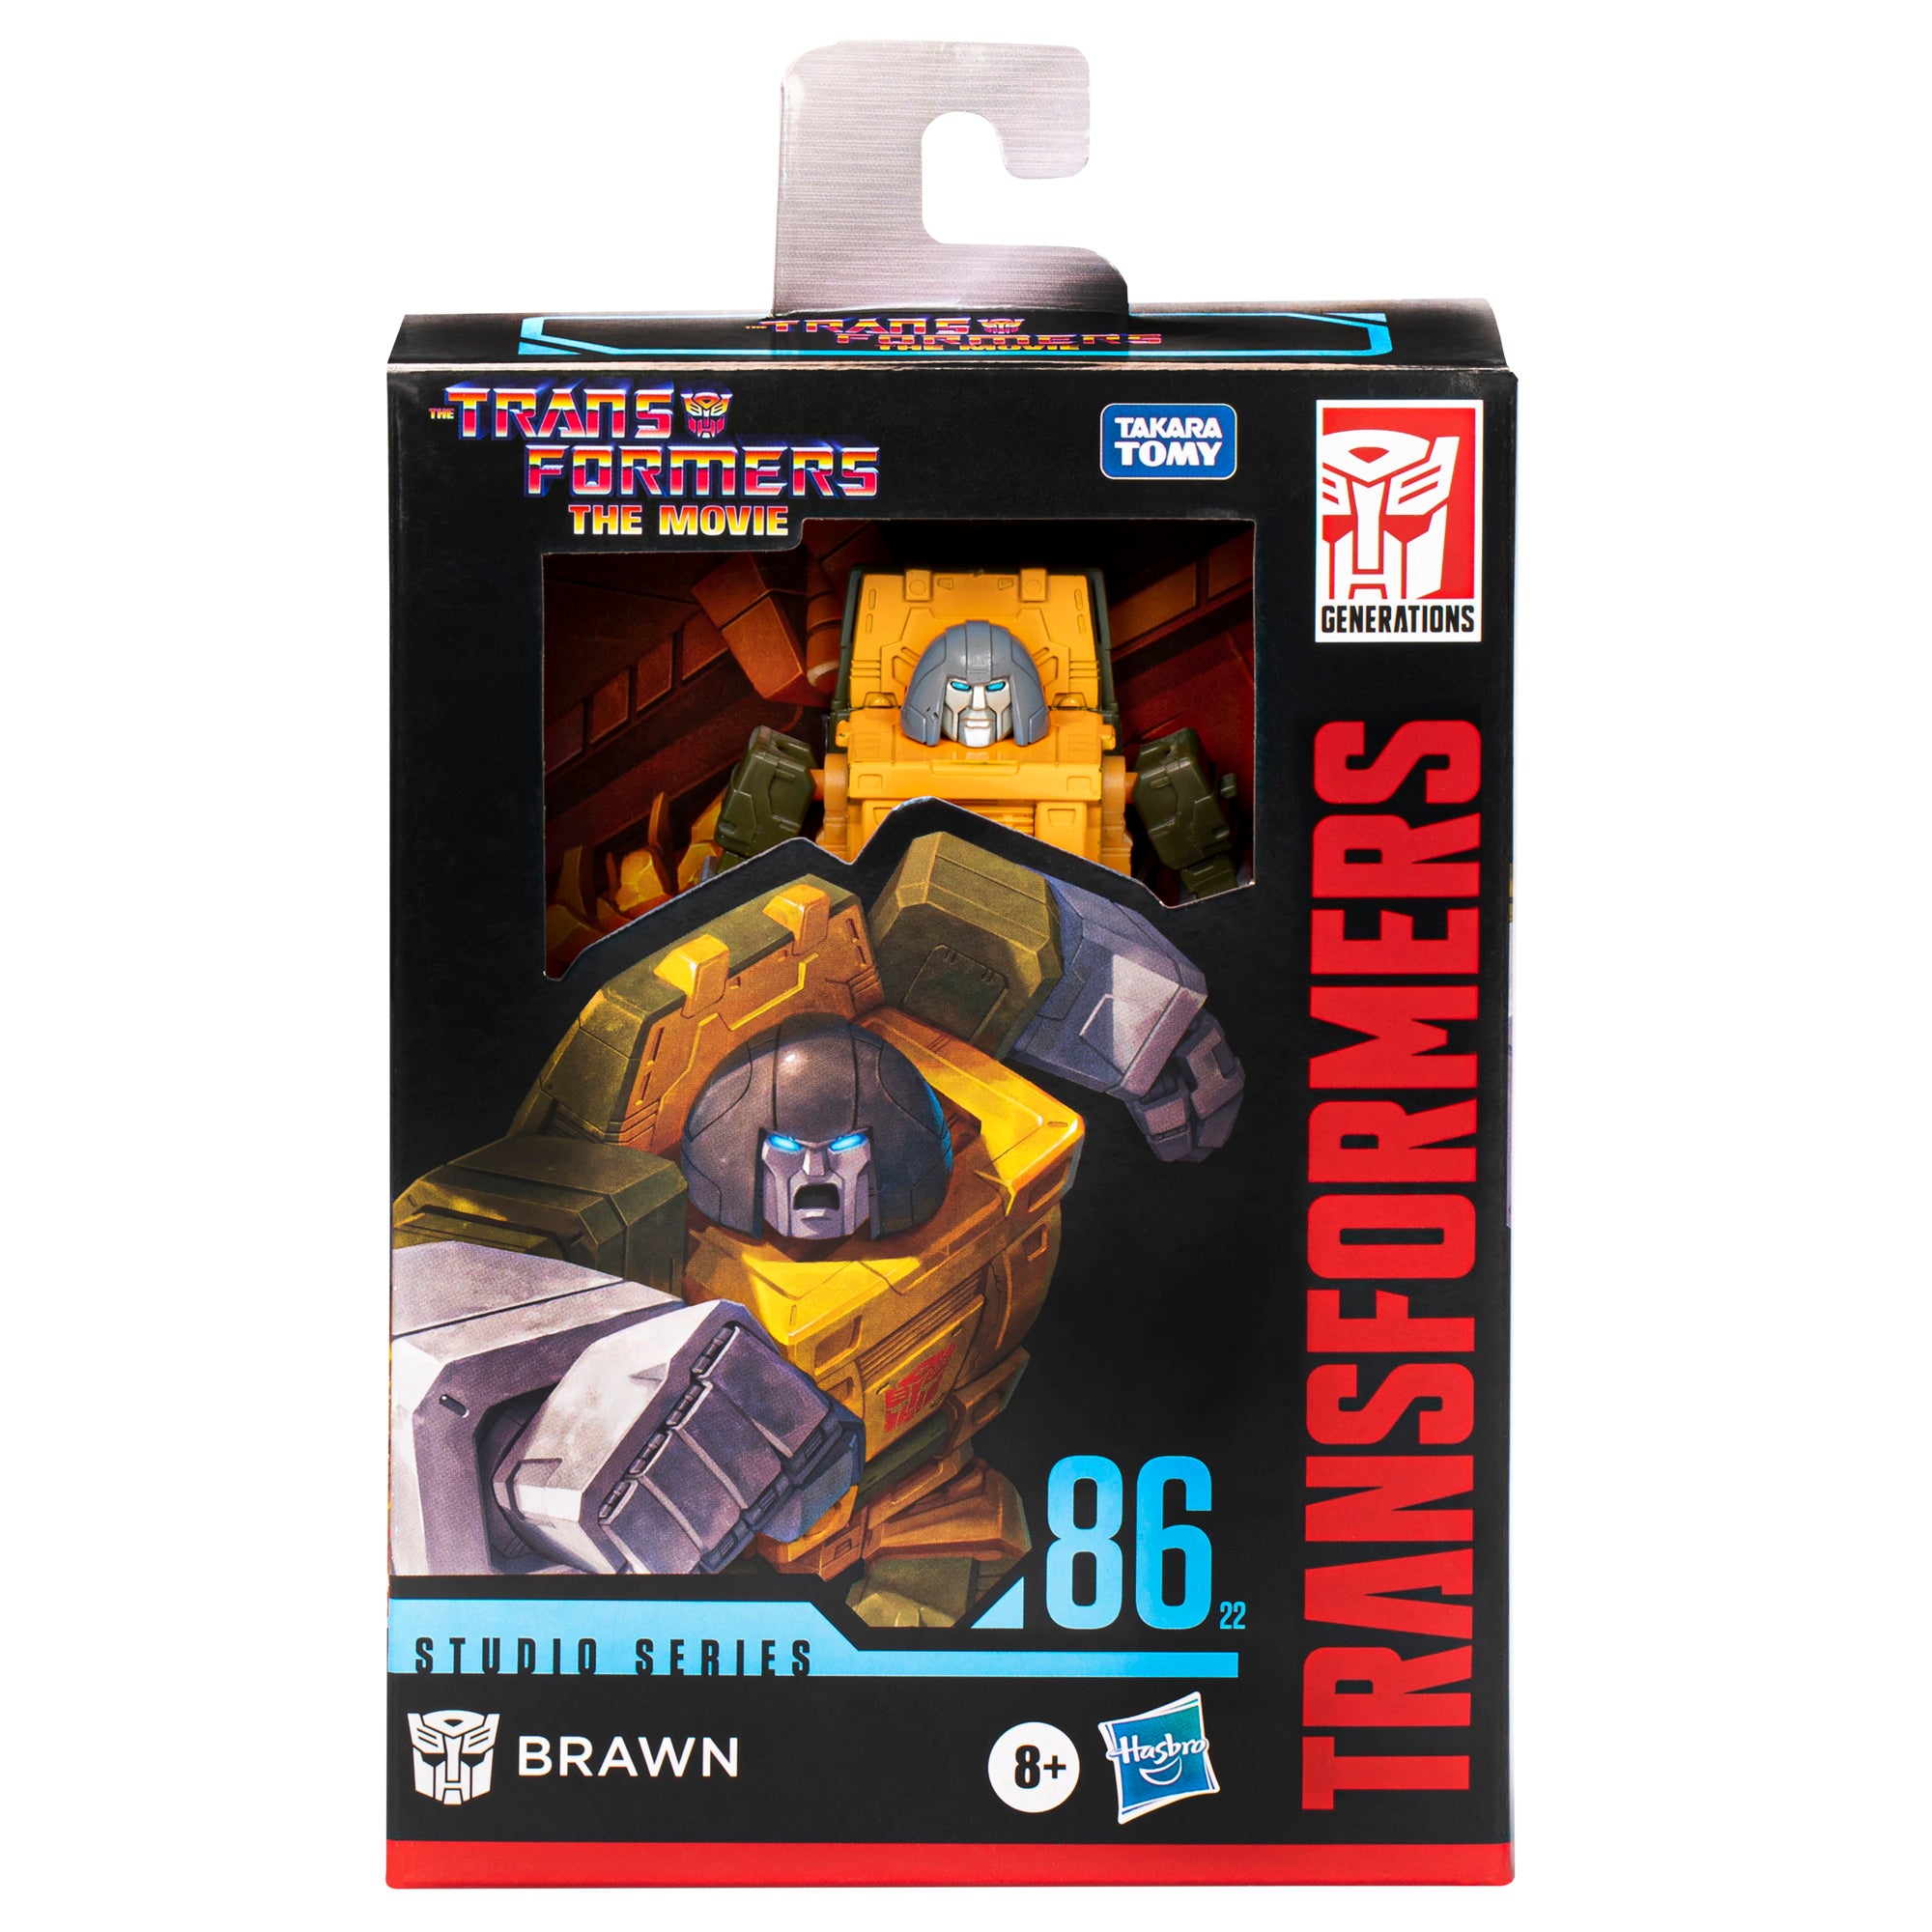 Transformers Studio Series Deluxe: The Movie 86 22 - Brawn